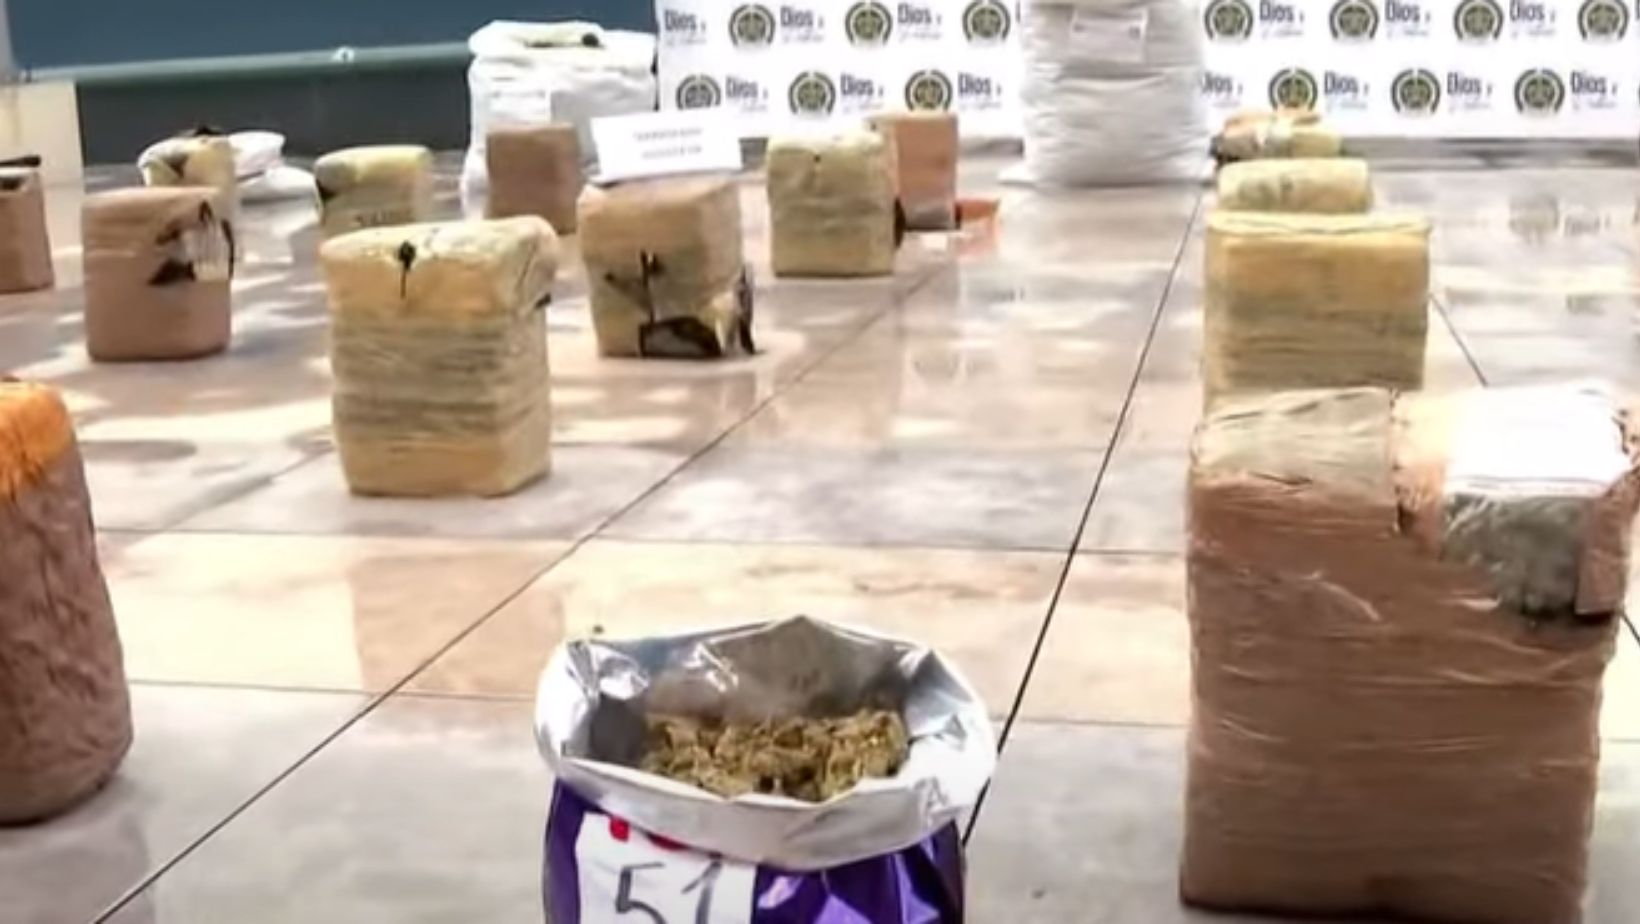 Detectan mezcal de droga que se vende en Bogotá: es marihuana con medicamento